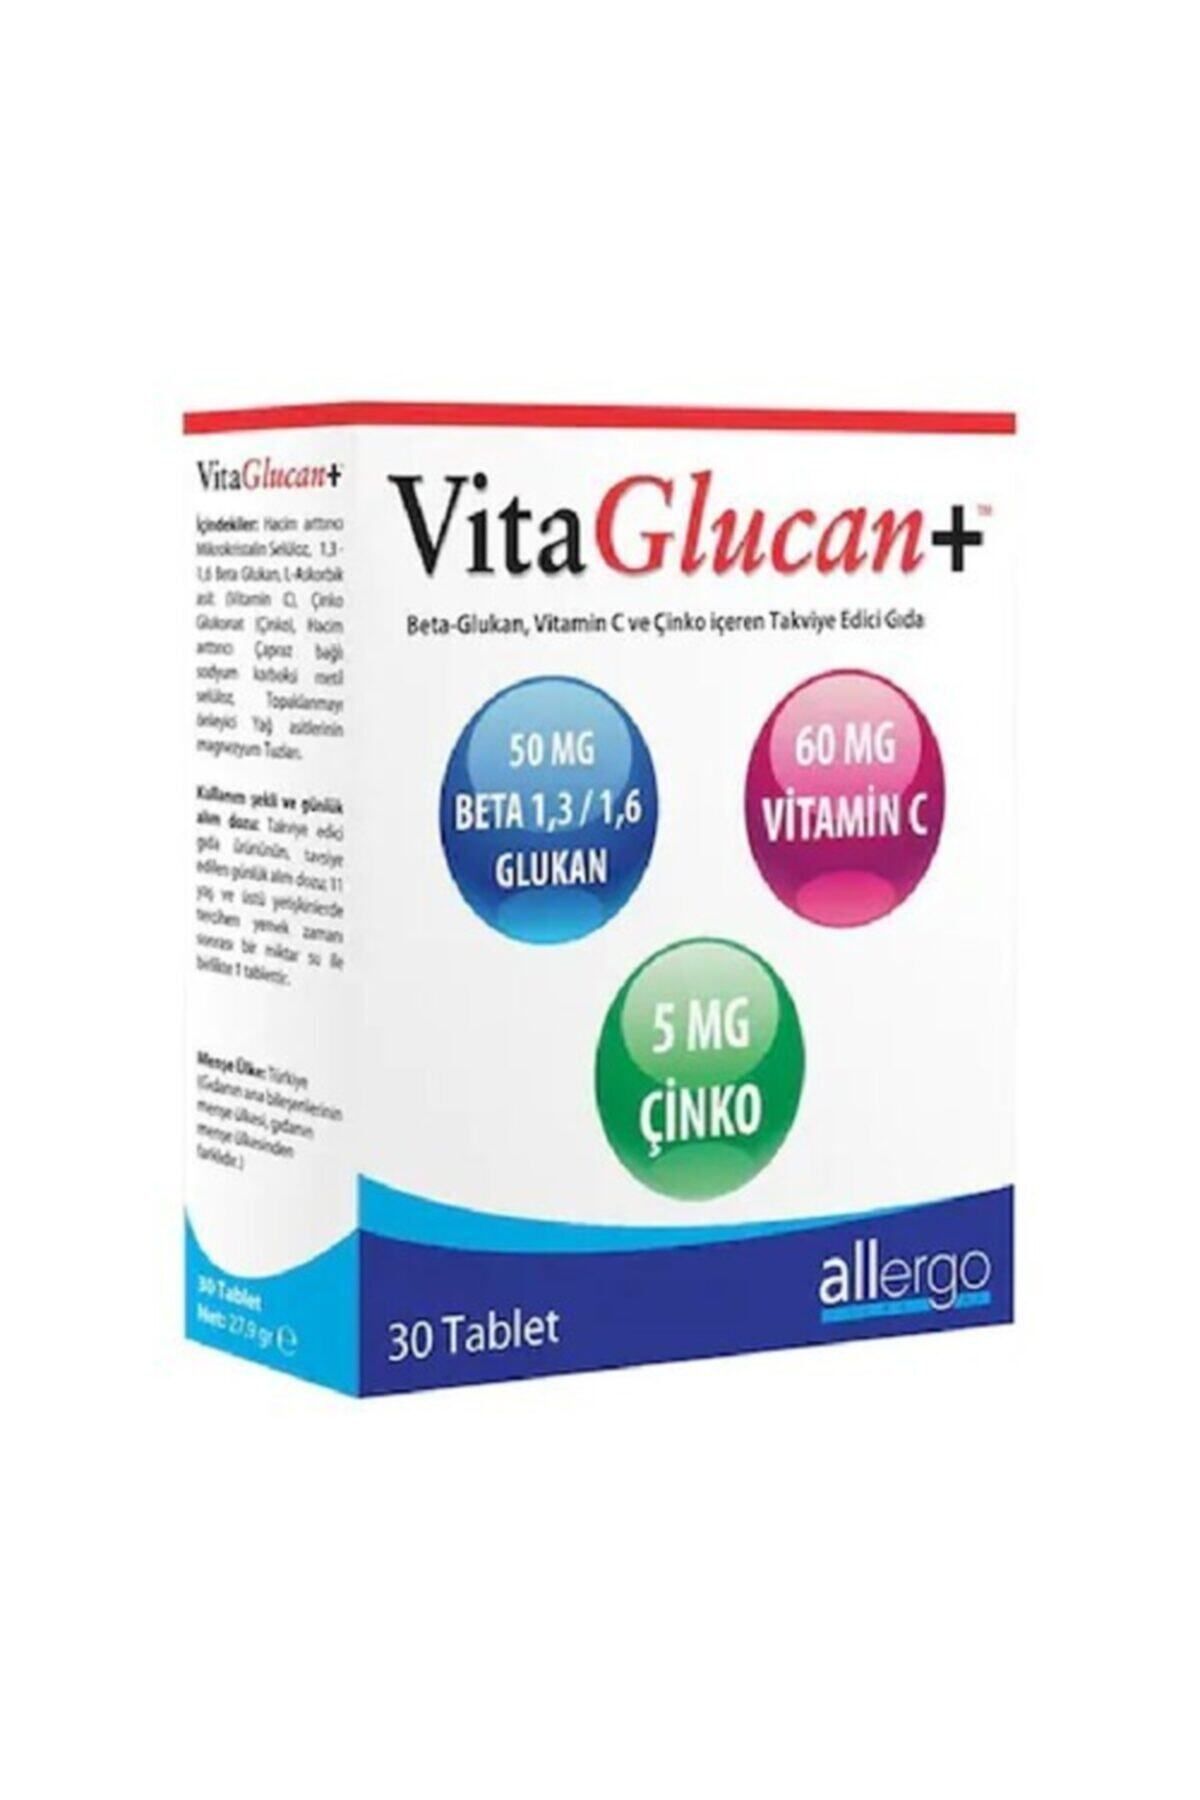 Allergo Vita Glucan 30 Tablet Beta Glucan